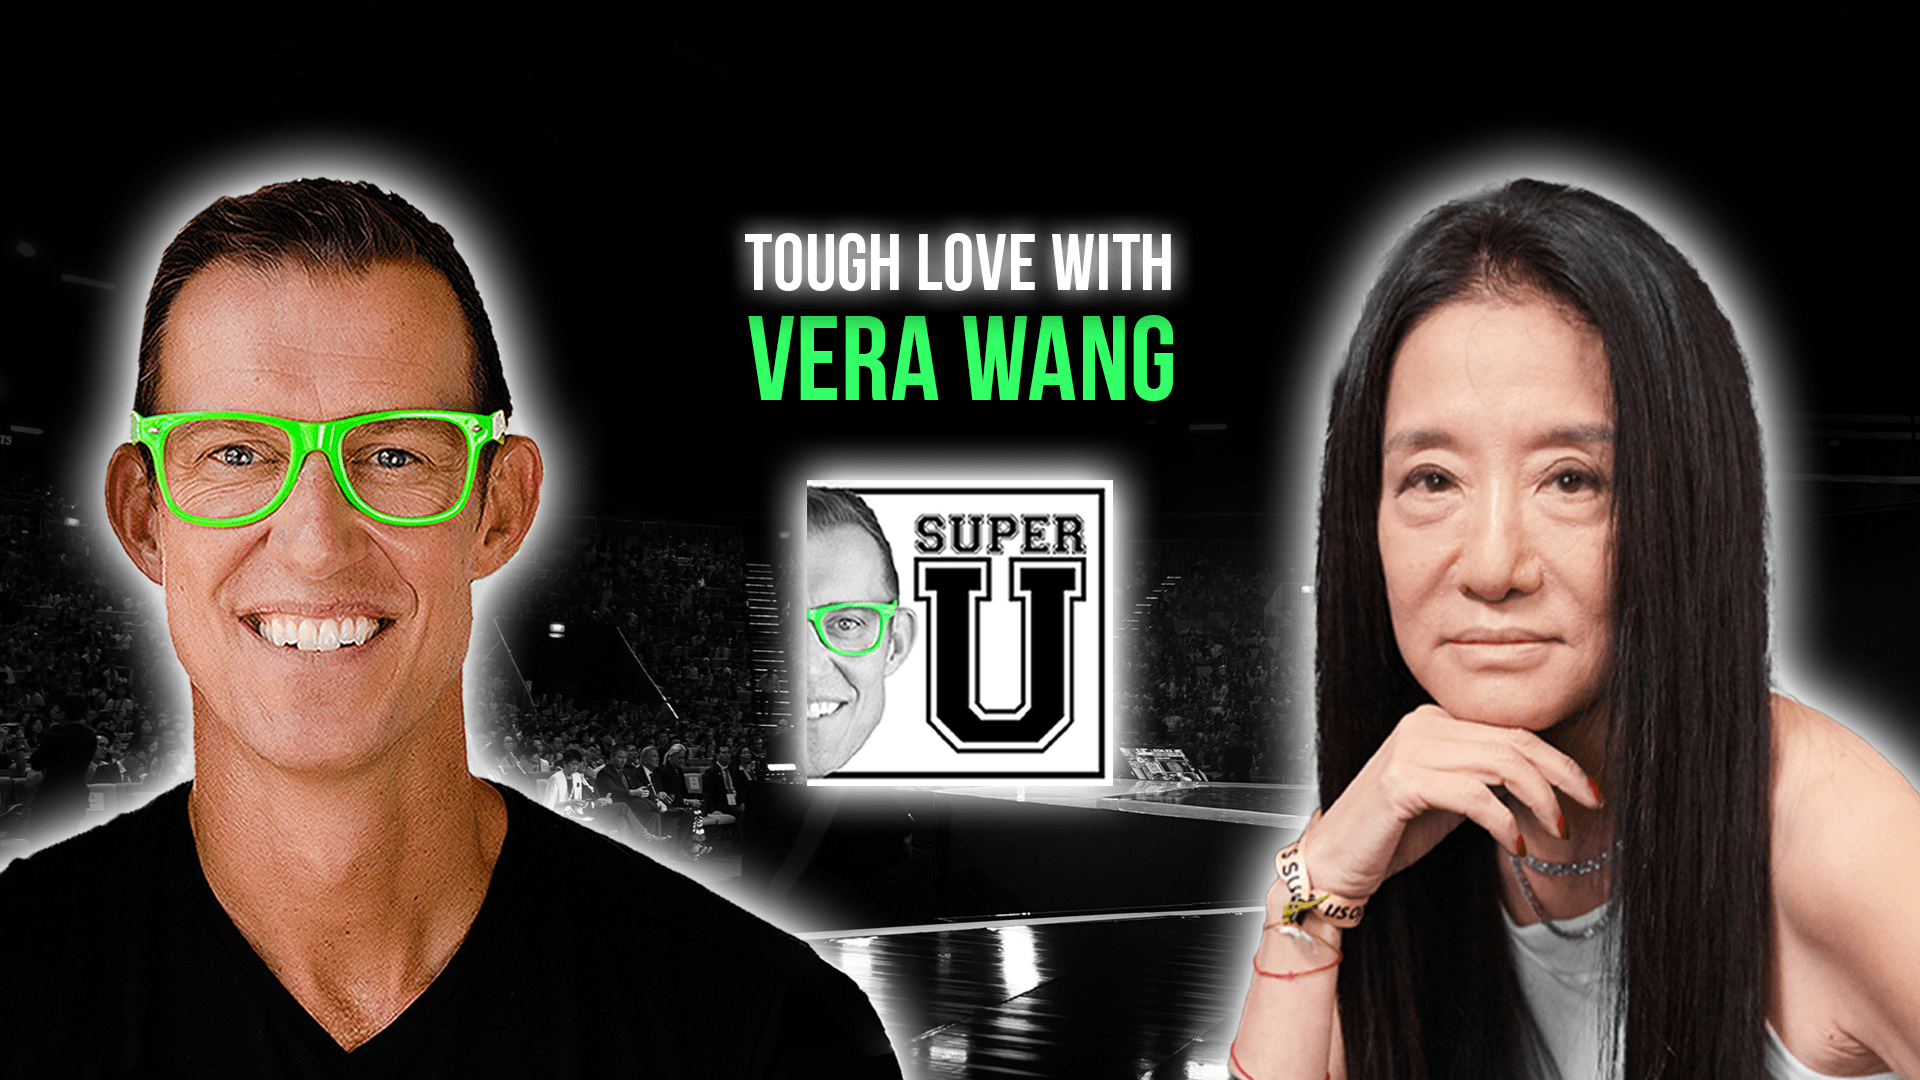 equalman-super-u-podcast-tough-love-with-vera-wang